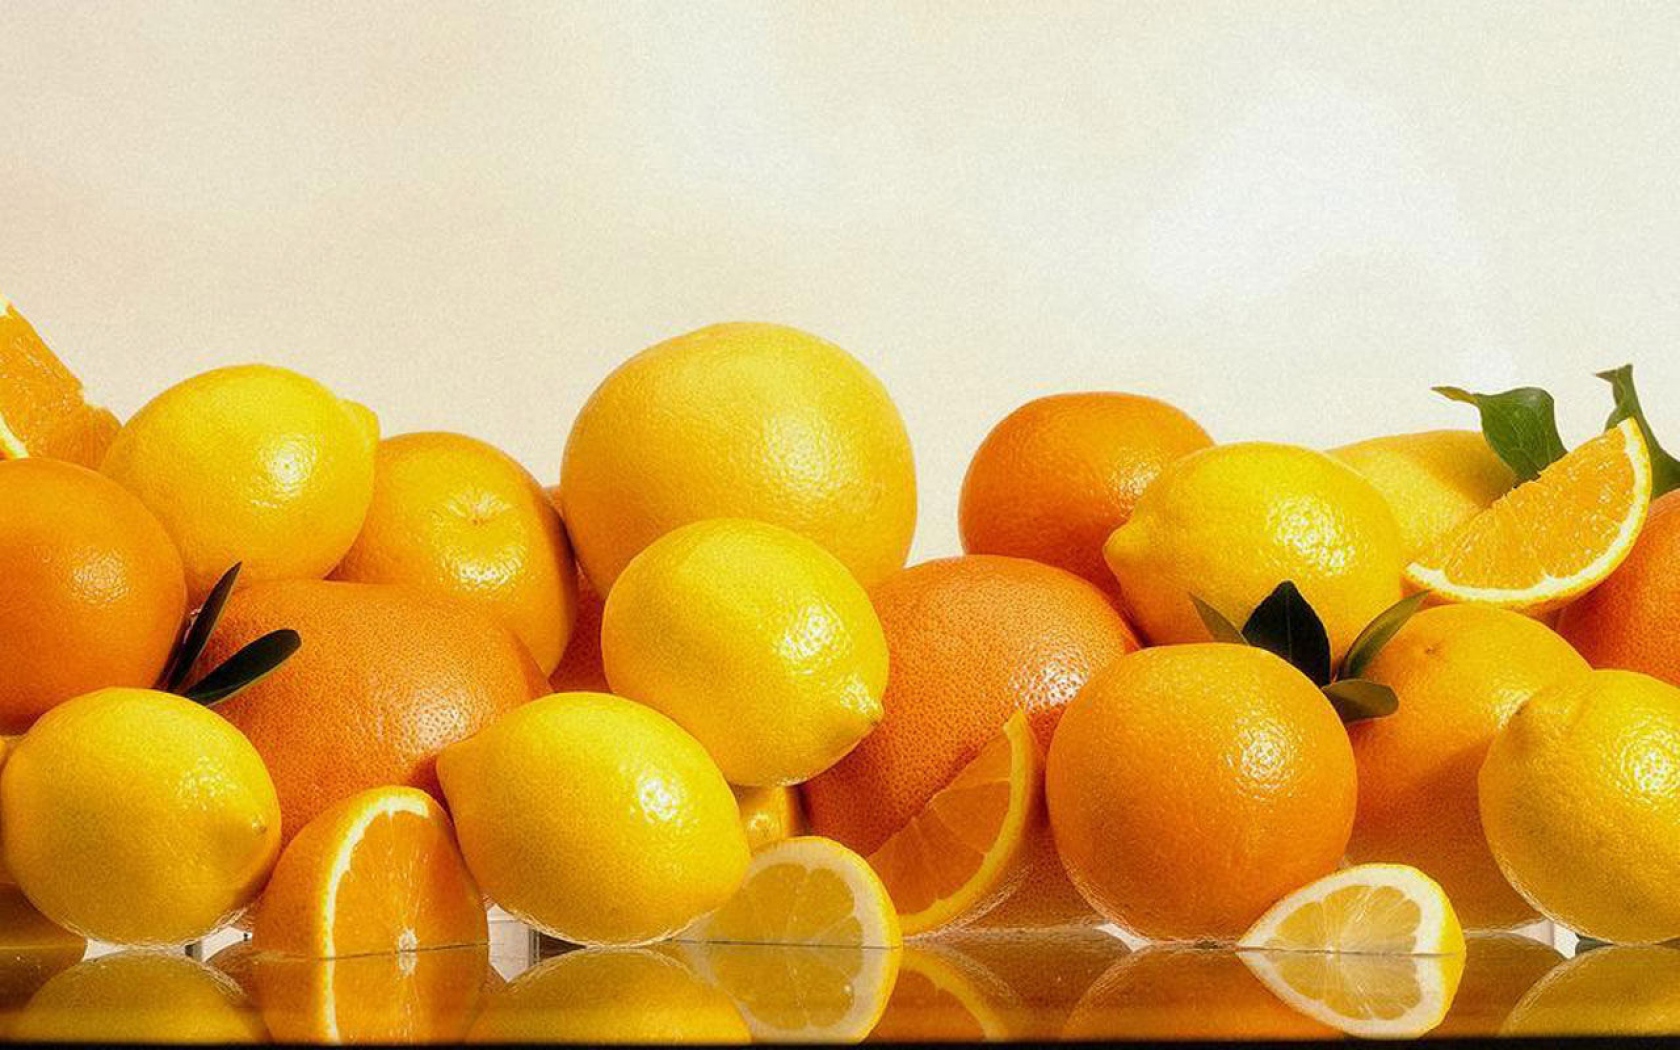 520910 descargar imagen fruta, alimento, limón, naranja), frutas: fondos de pantalla y protectores de pantalla gratis